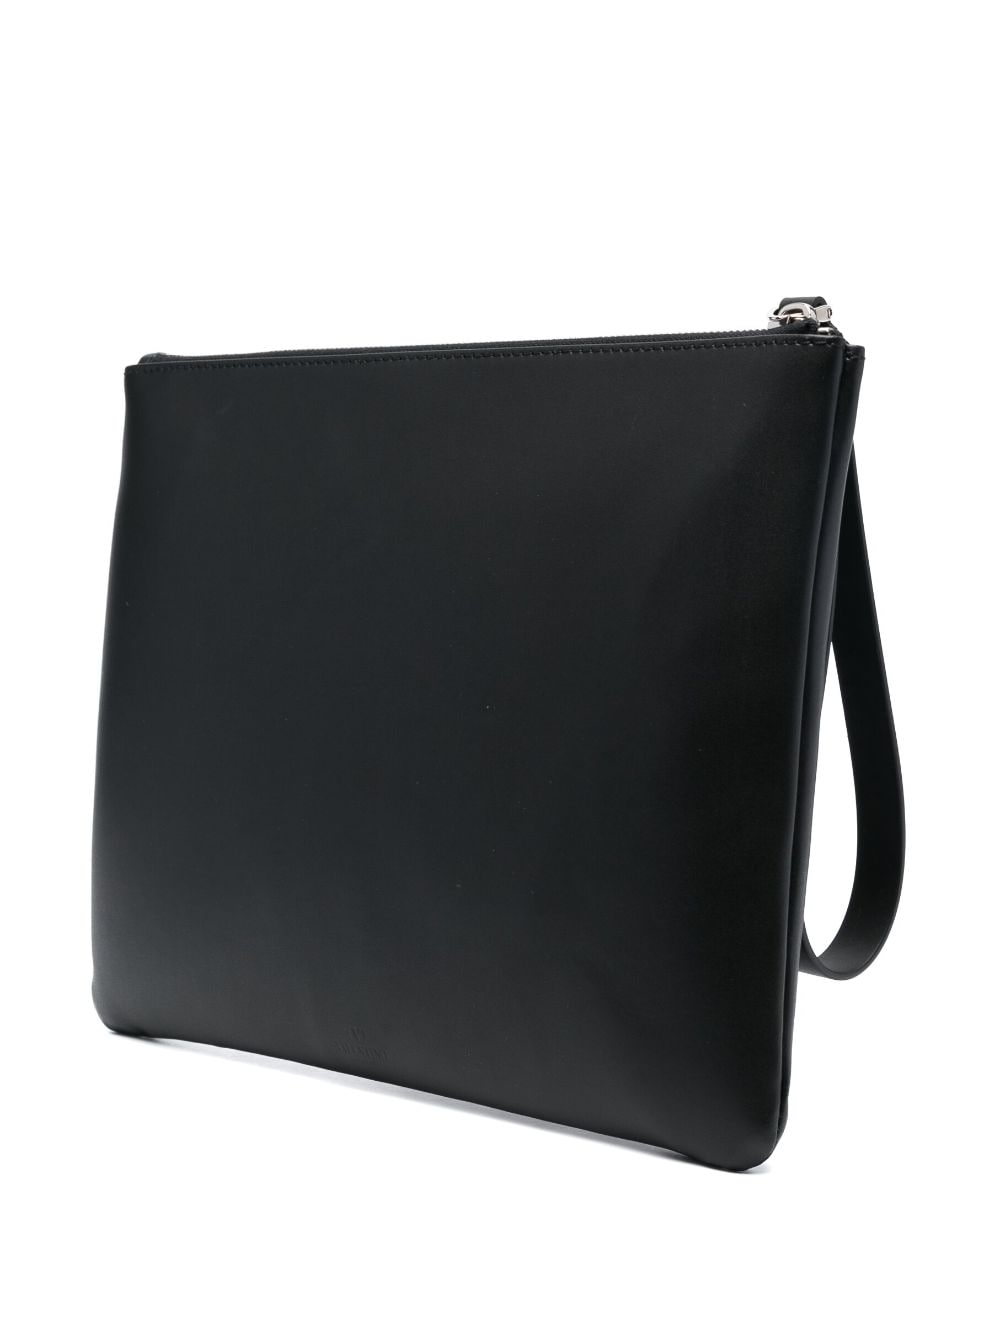 Valentino Garavani VLTN Leather Clutch Bag - Farfetch